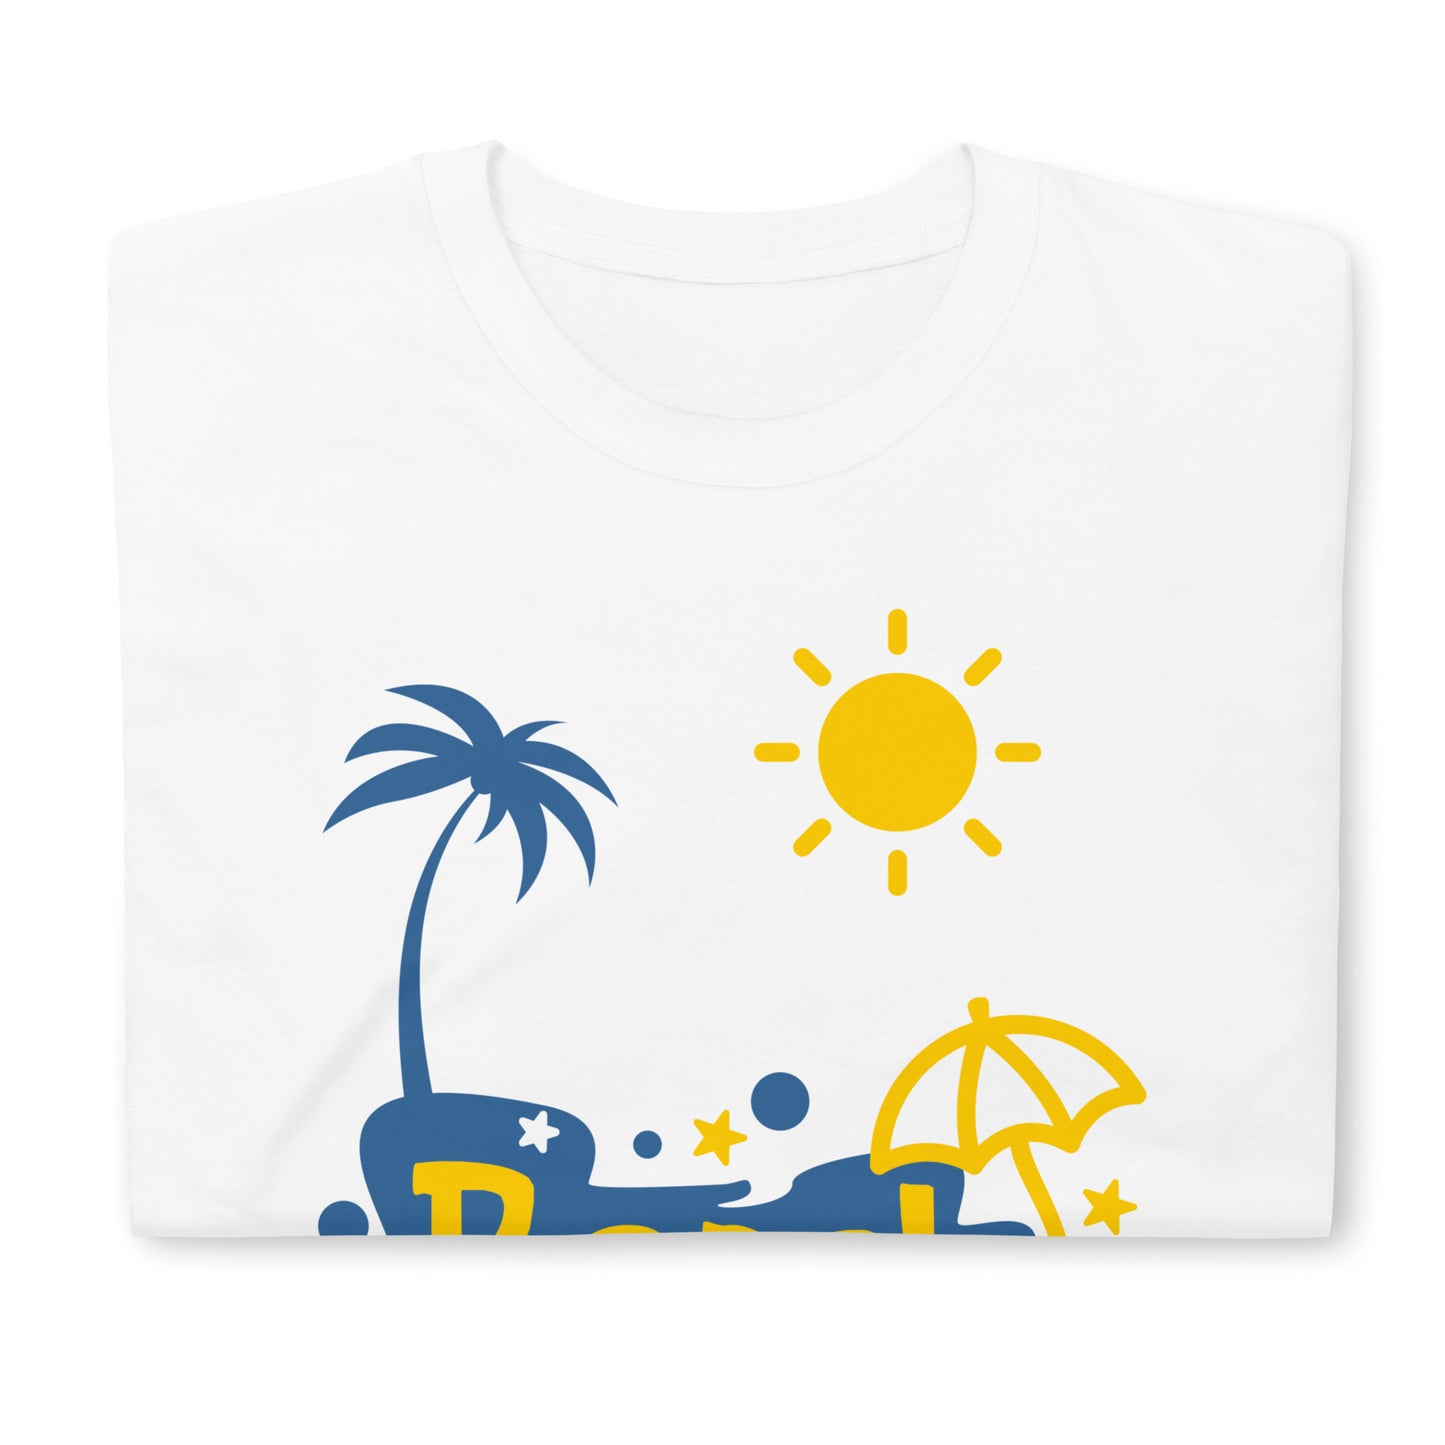 Beach Please Unisex T-Shirt, Funny Beach Shirt, Vacation Tee, Summer Vacation Gift